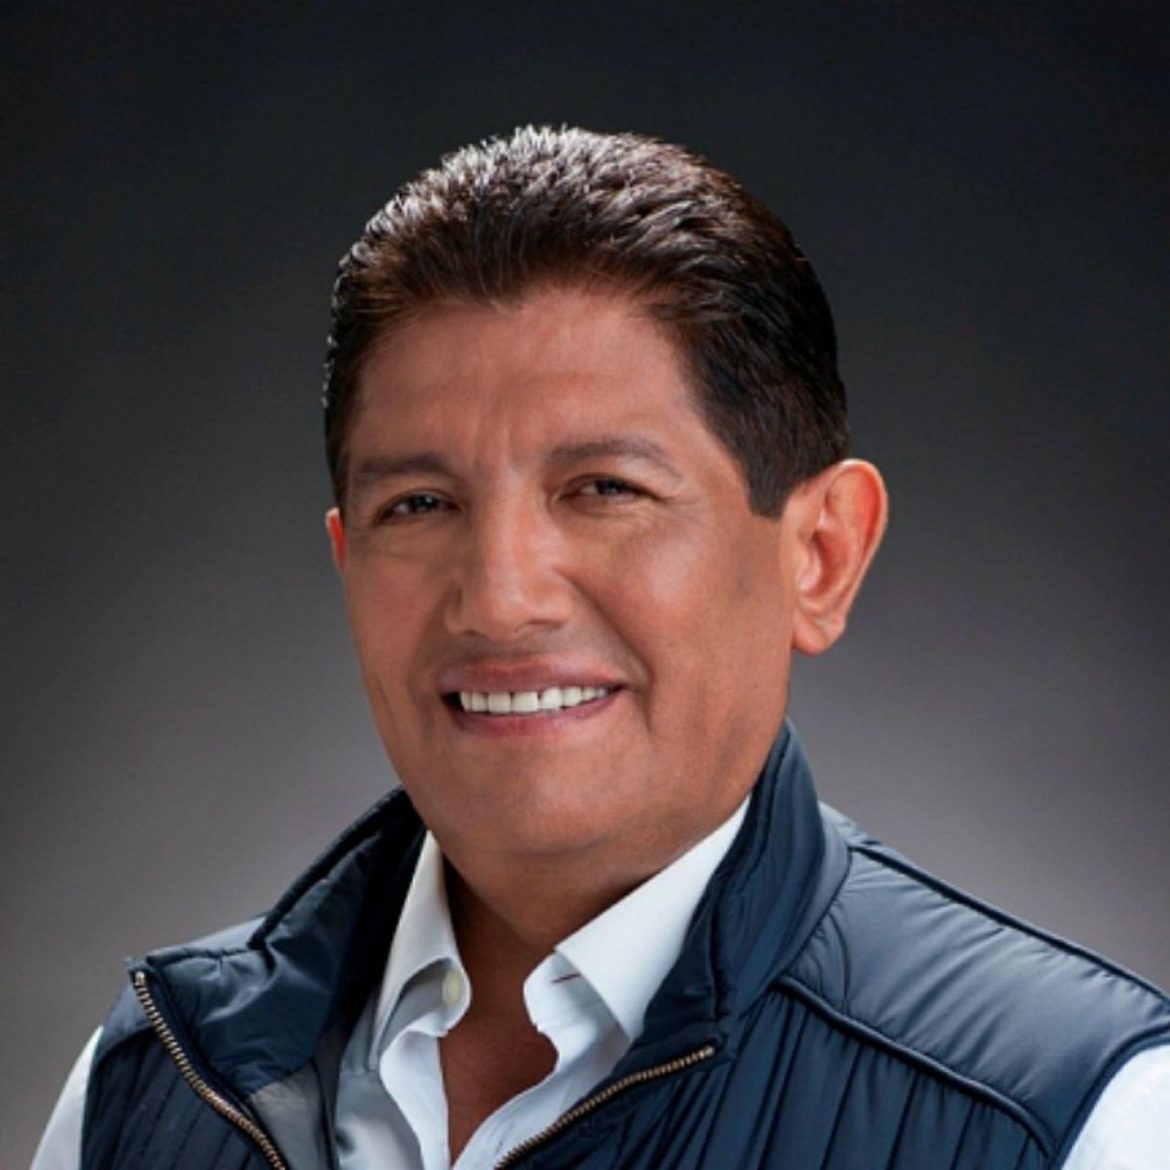 Juan Osorio regresa a trabajar tras vencer al coronavirus